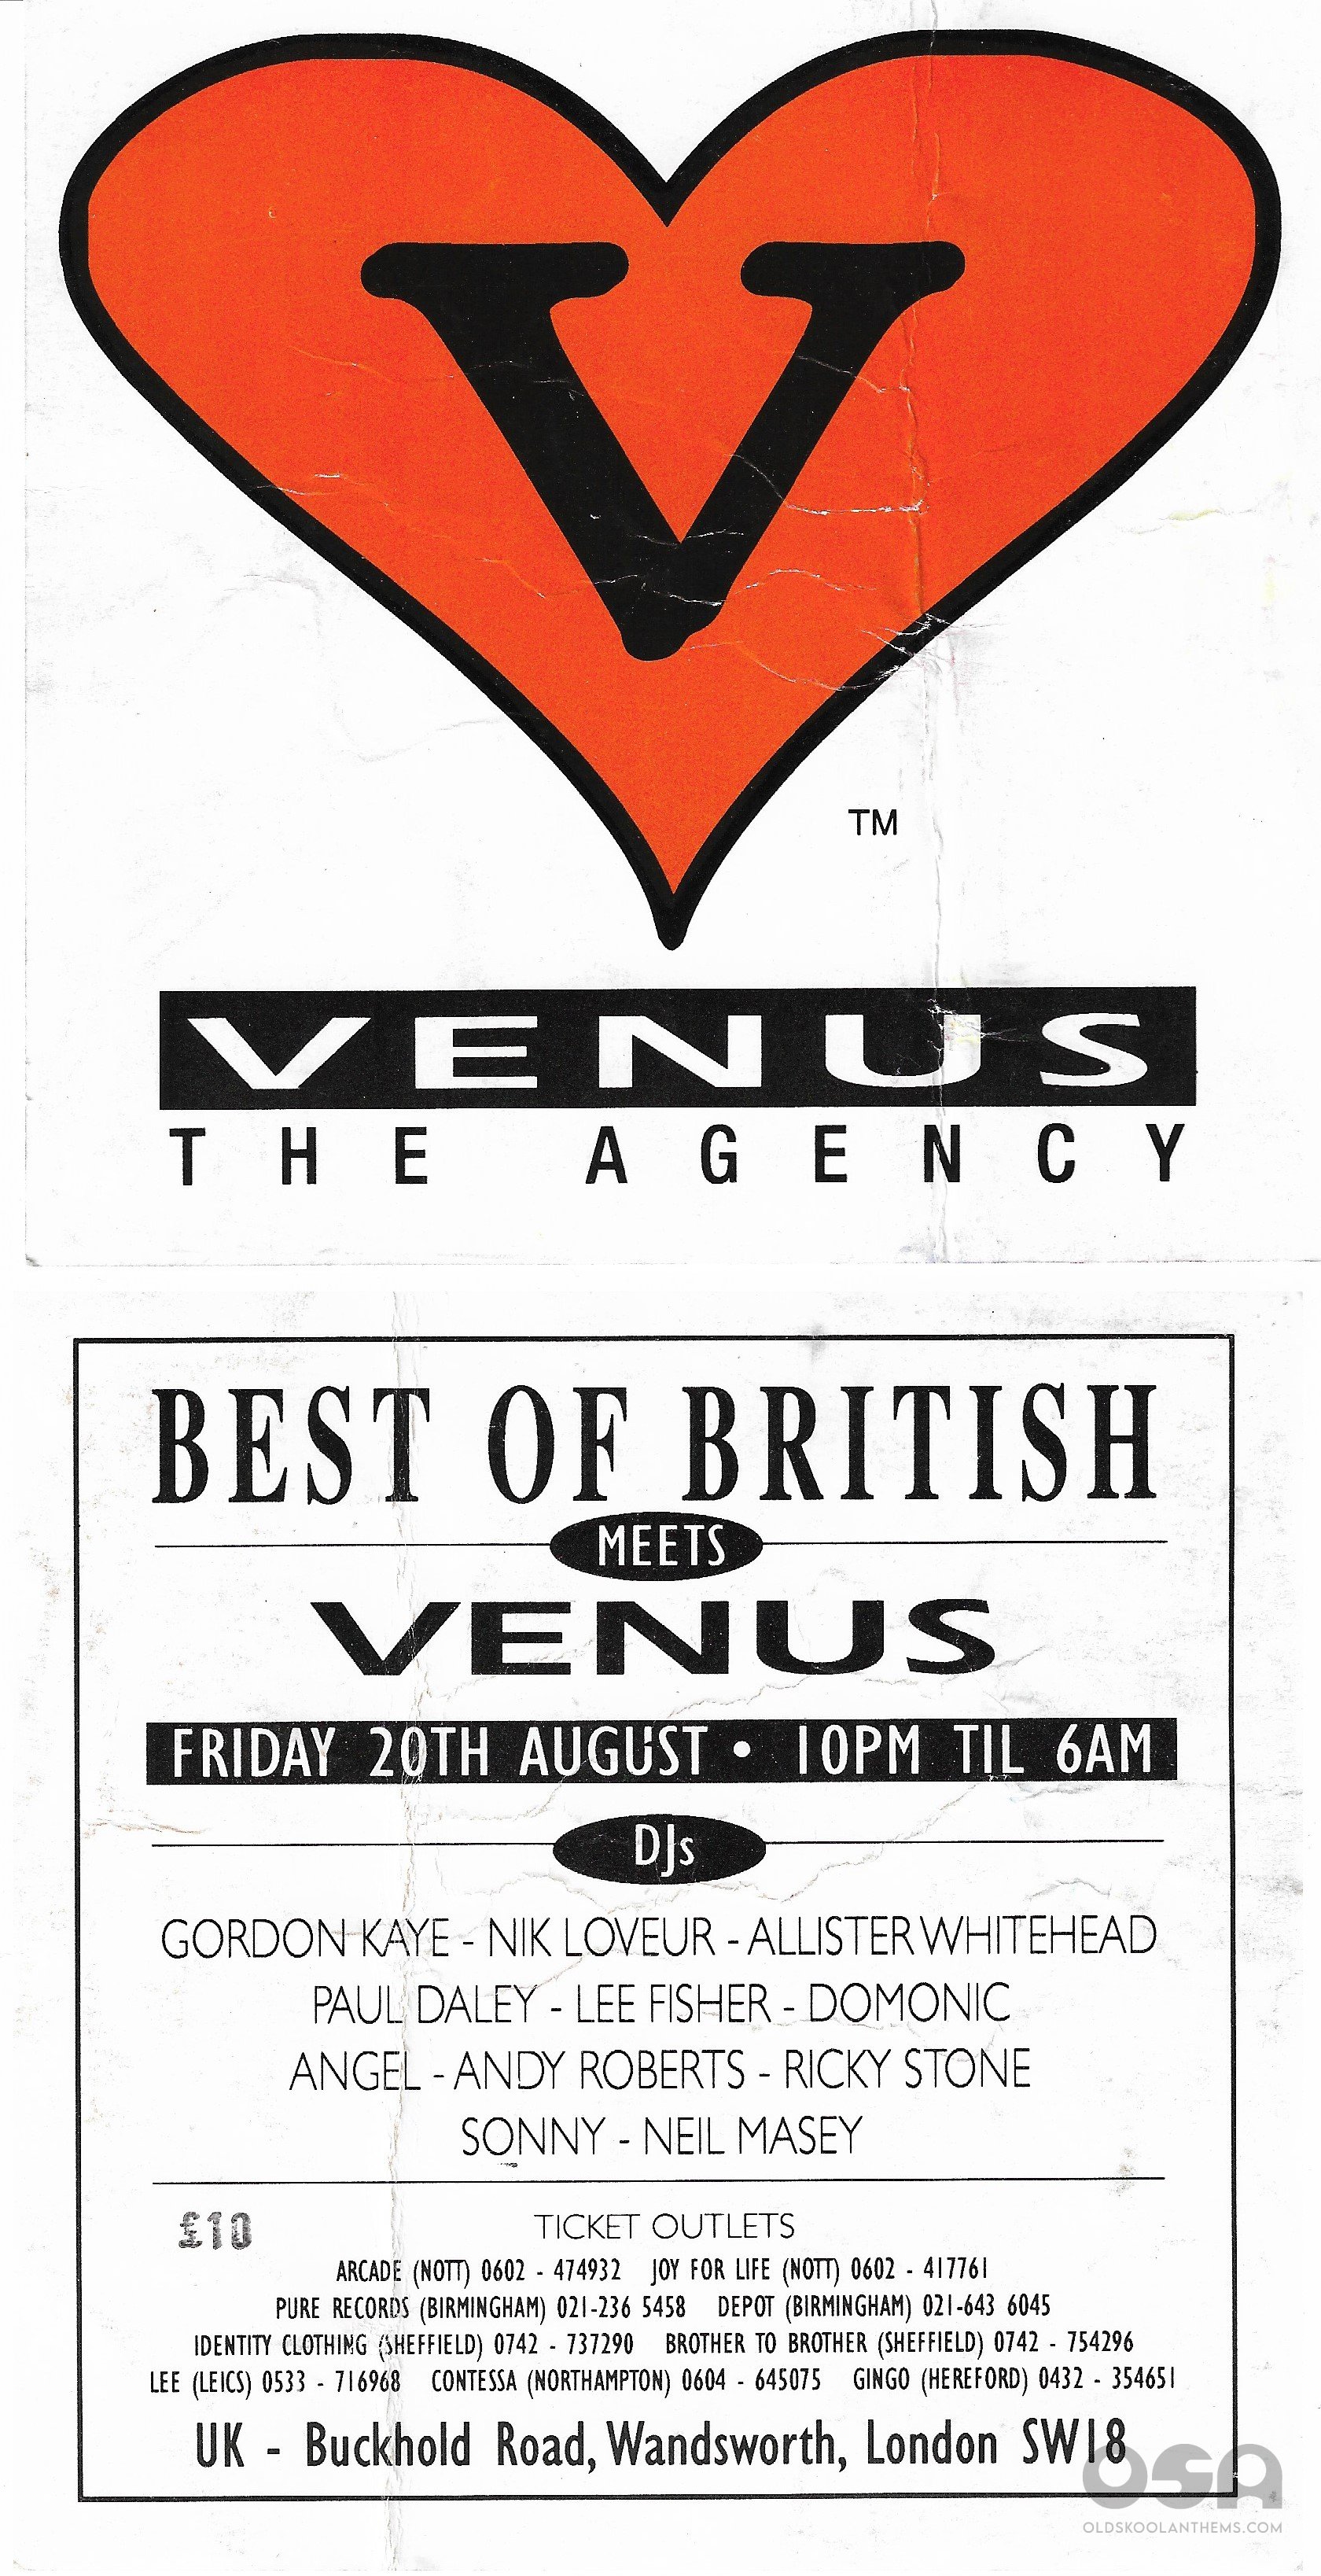 Venus - Best Of British - 20th August 1993 (A&B Side) .jpg